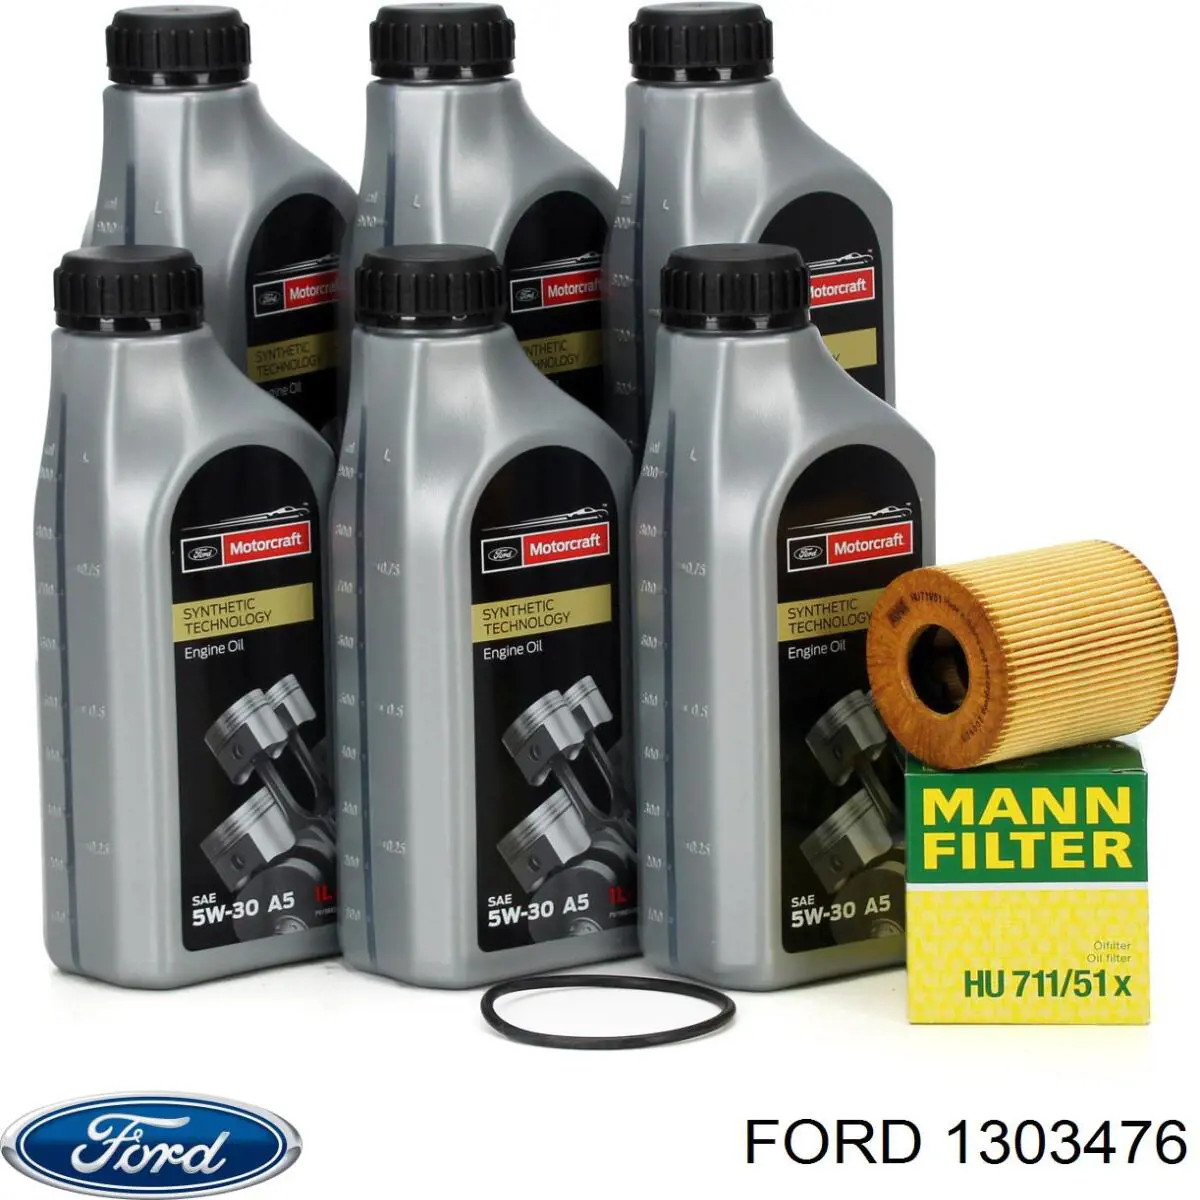 1303476 Ford filtro de aceite